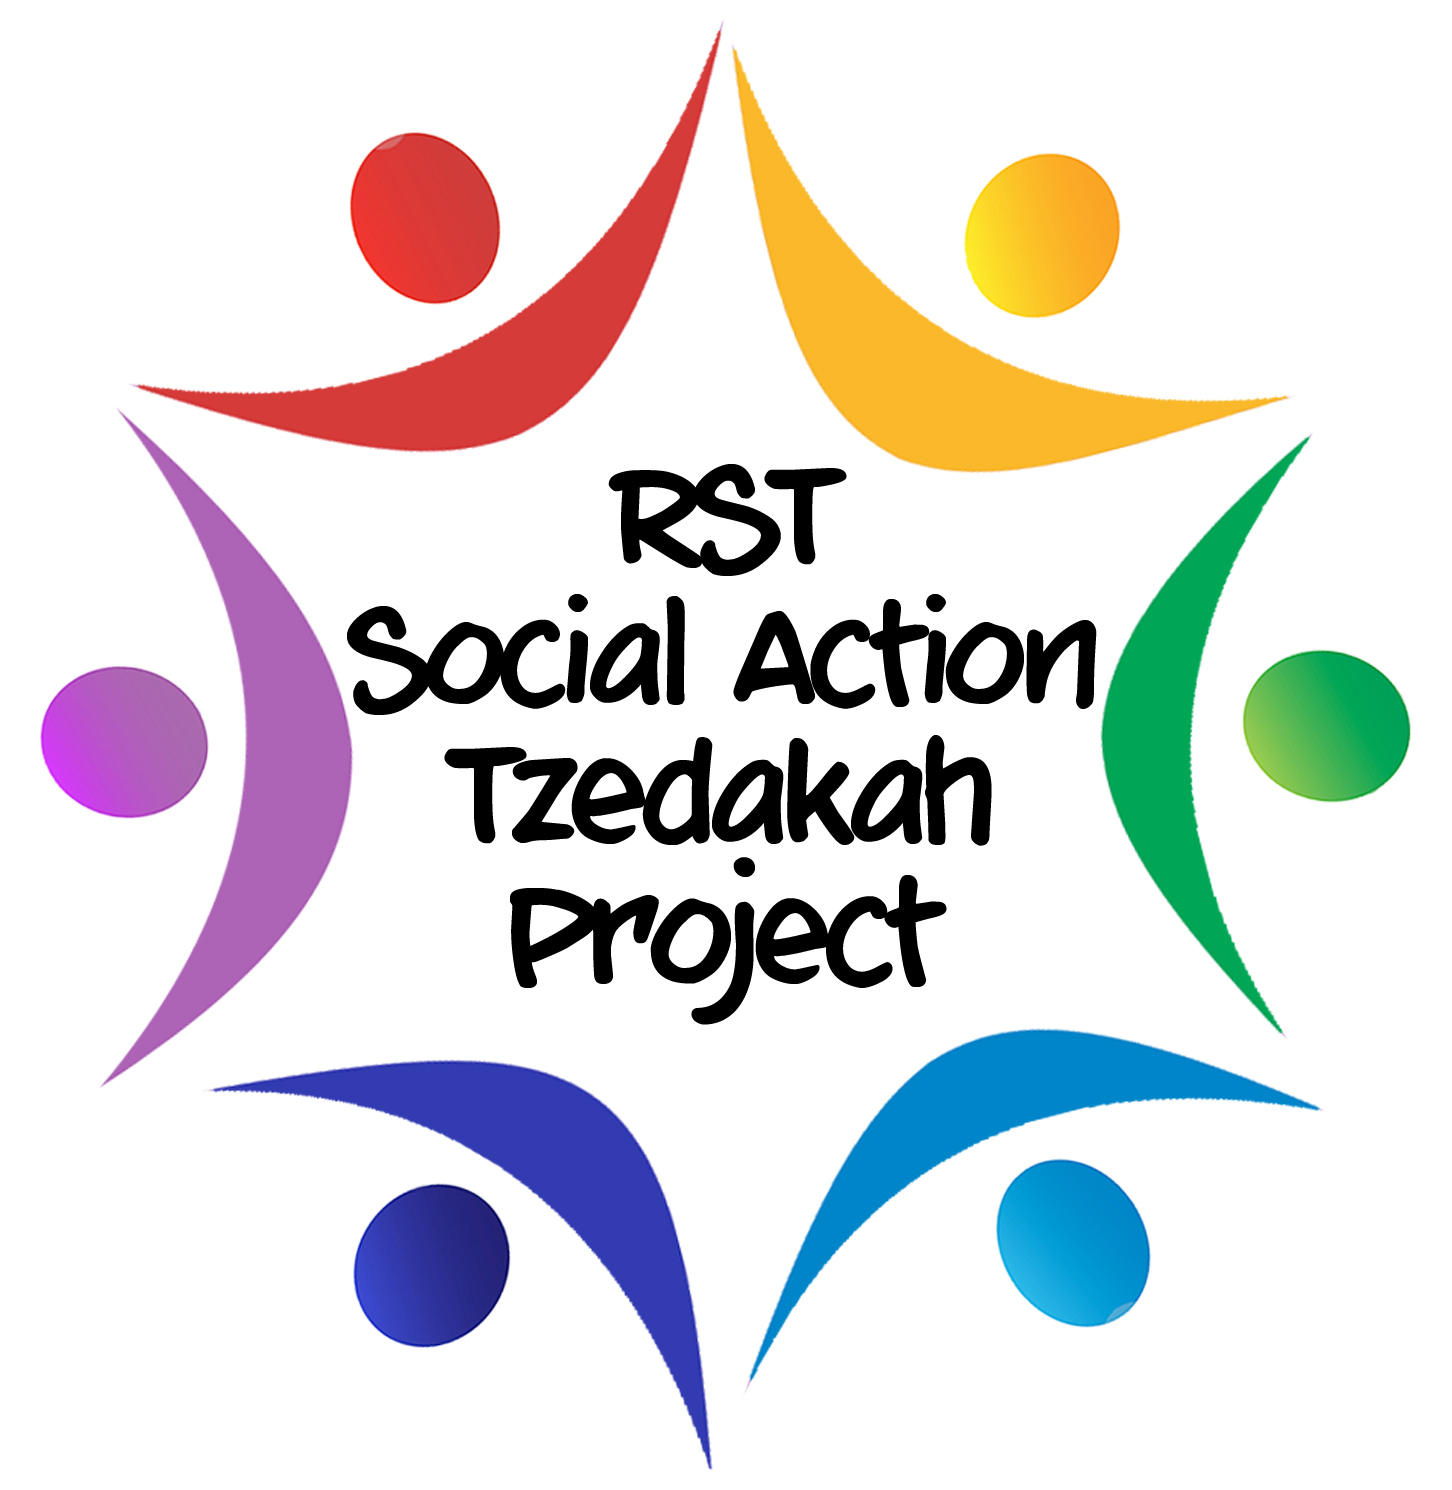 Social Action Tzedakah Project